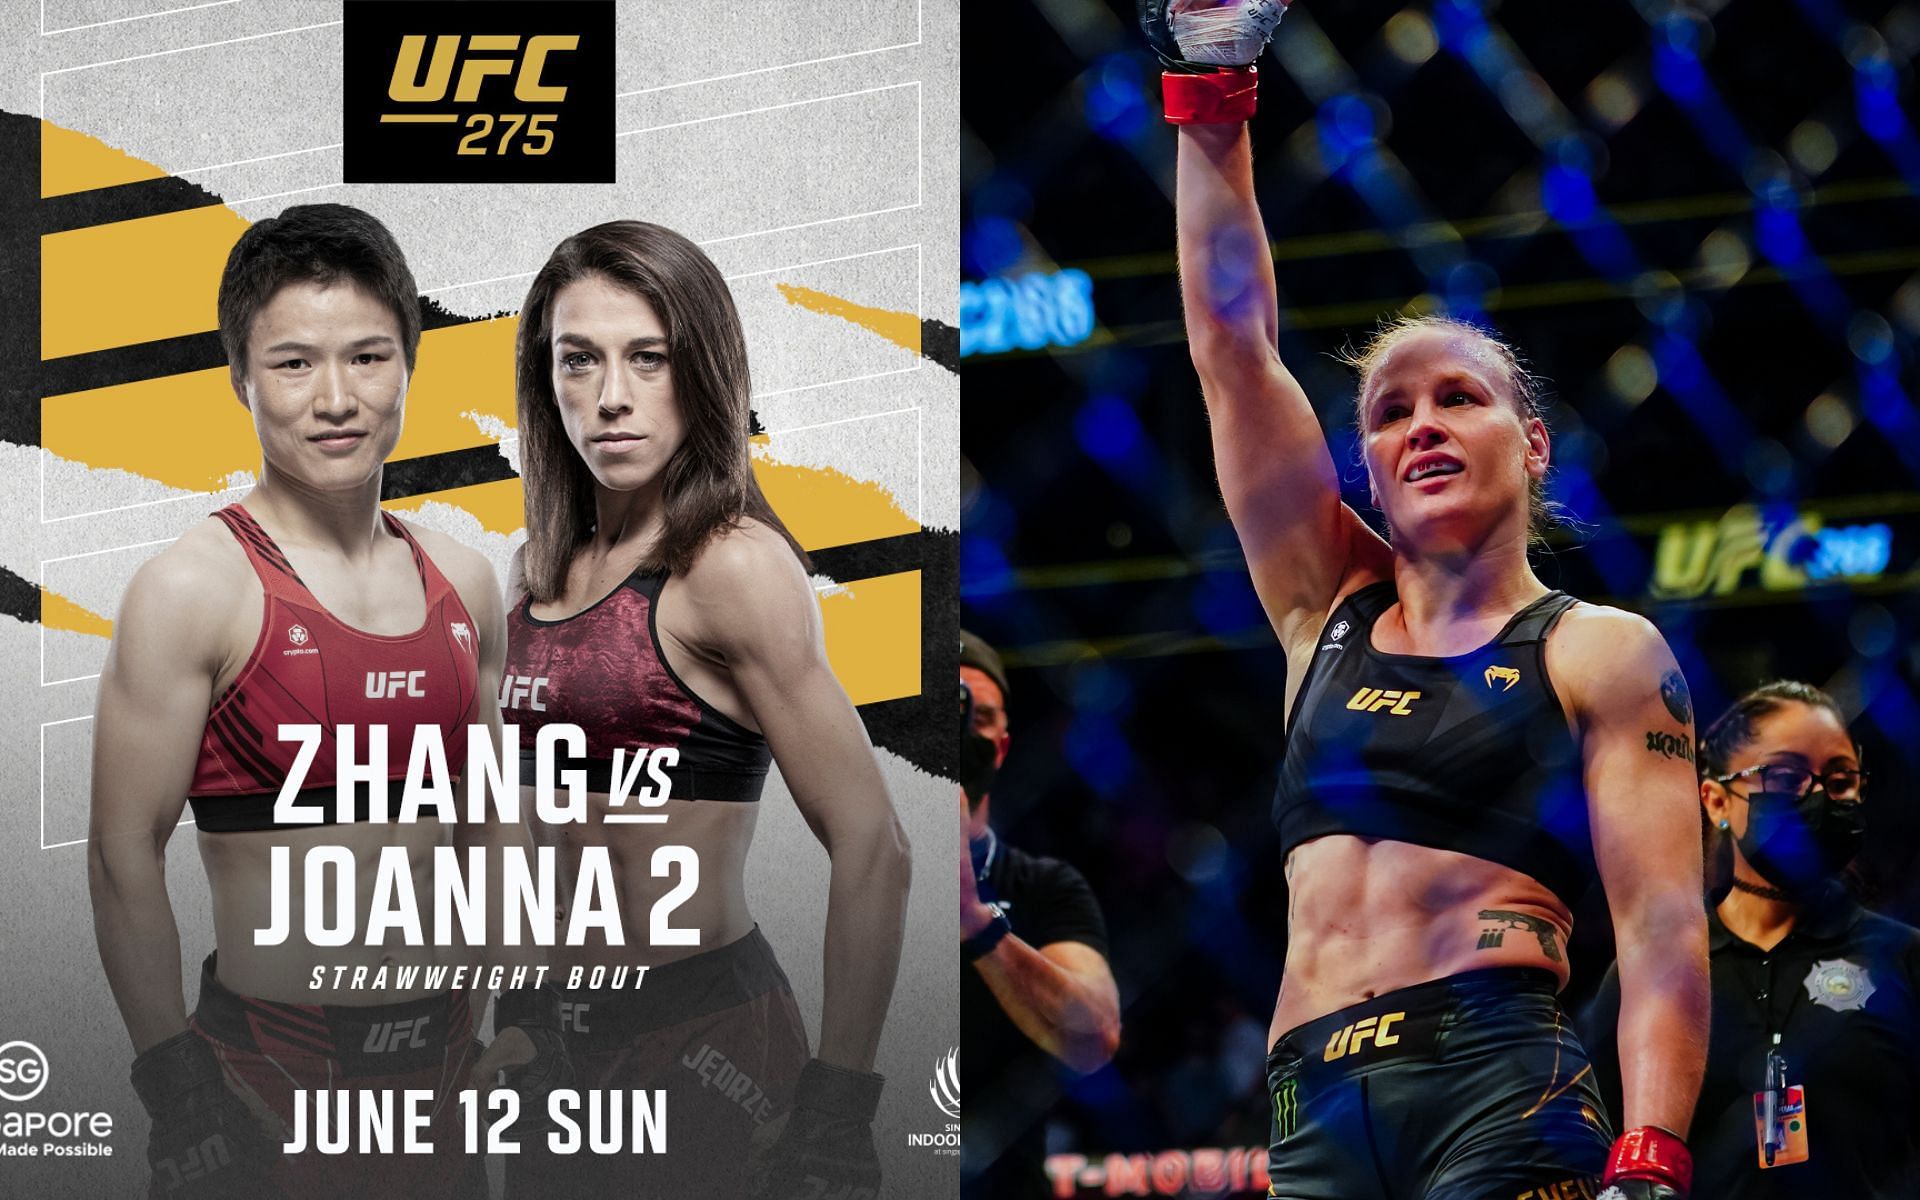 UFC 275 fight poster (left), Valentina Shevchenko (right) [Left image via @ufc on Twitter]